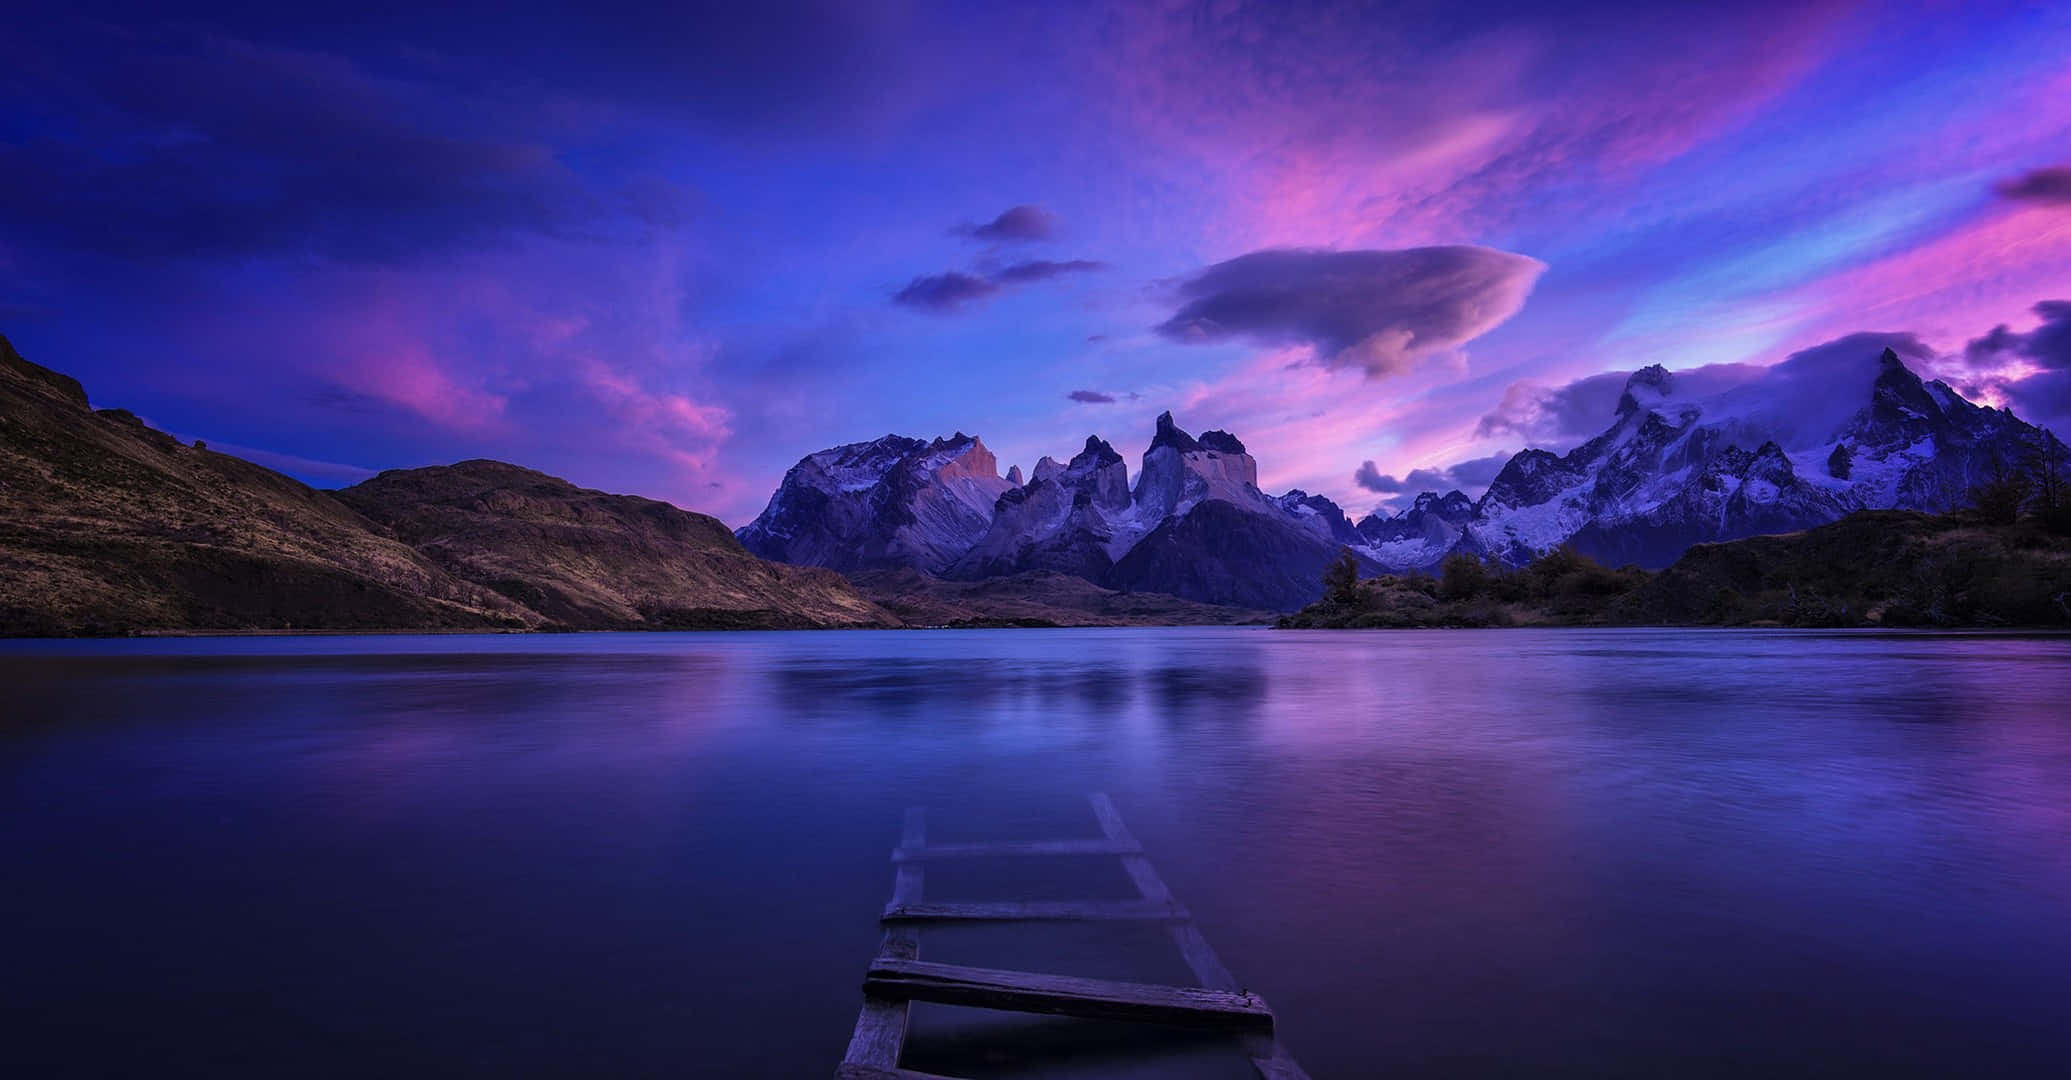 Bildmagisk Scen I Patagonien